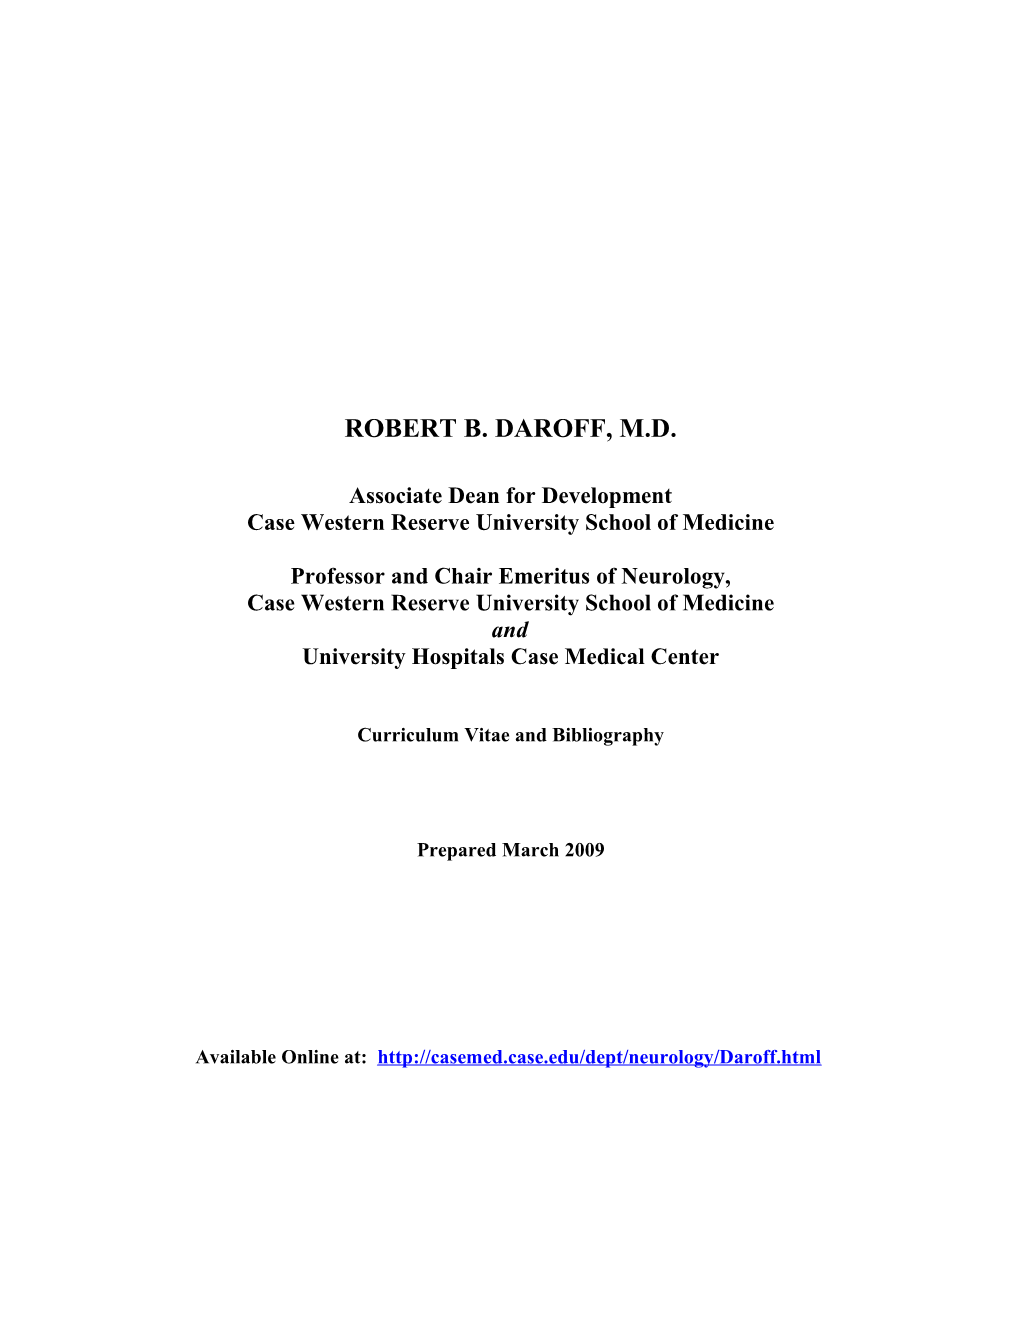 Curriculum Vitae of Robert B. Daroff, M.D s1